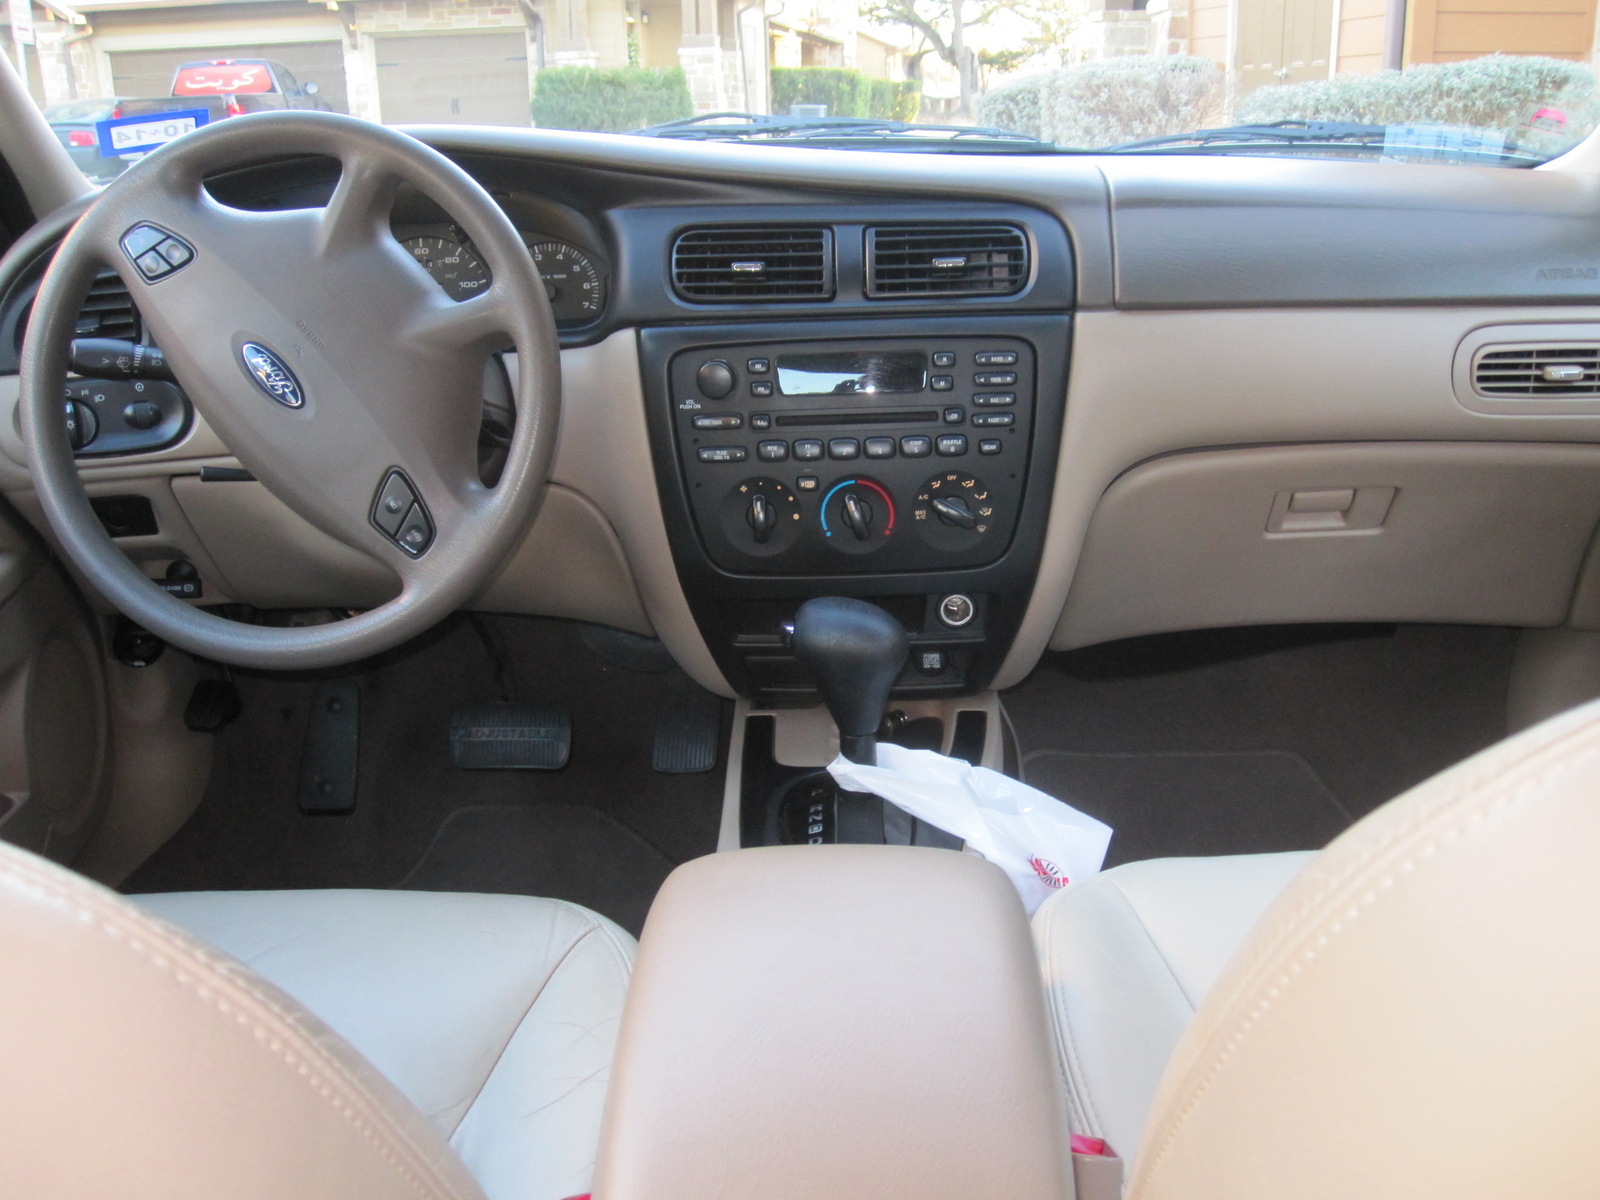 2002 Ford taurus interior dimensions #8